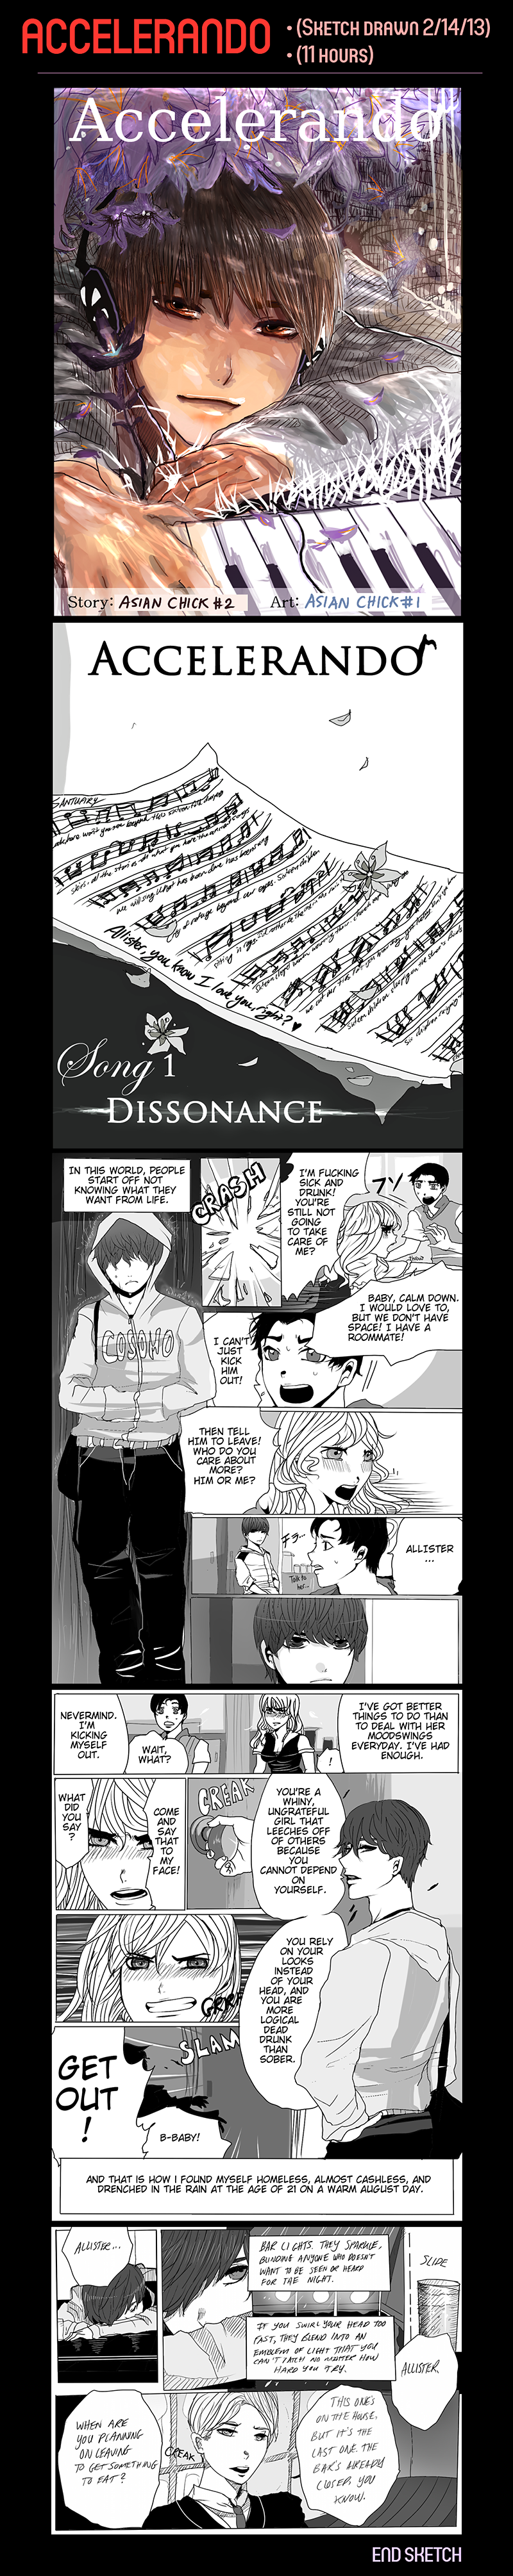 Accelerando (Manga Sketch) by luckylace222